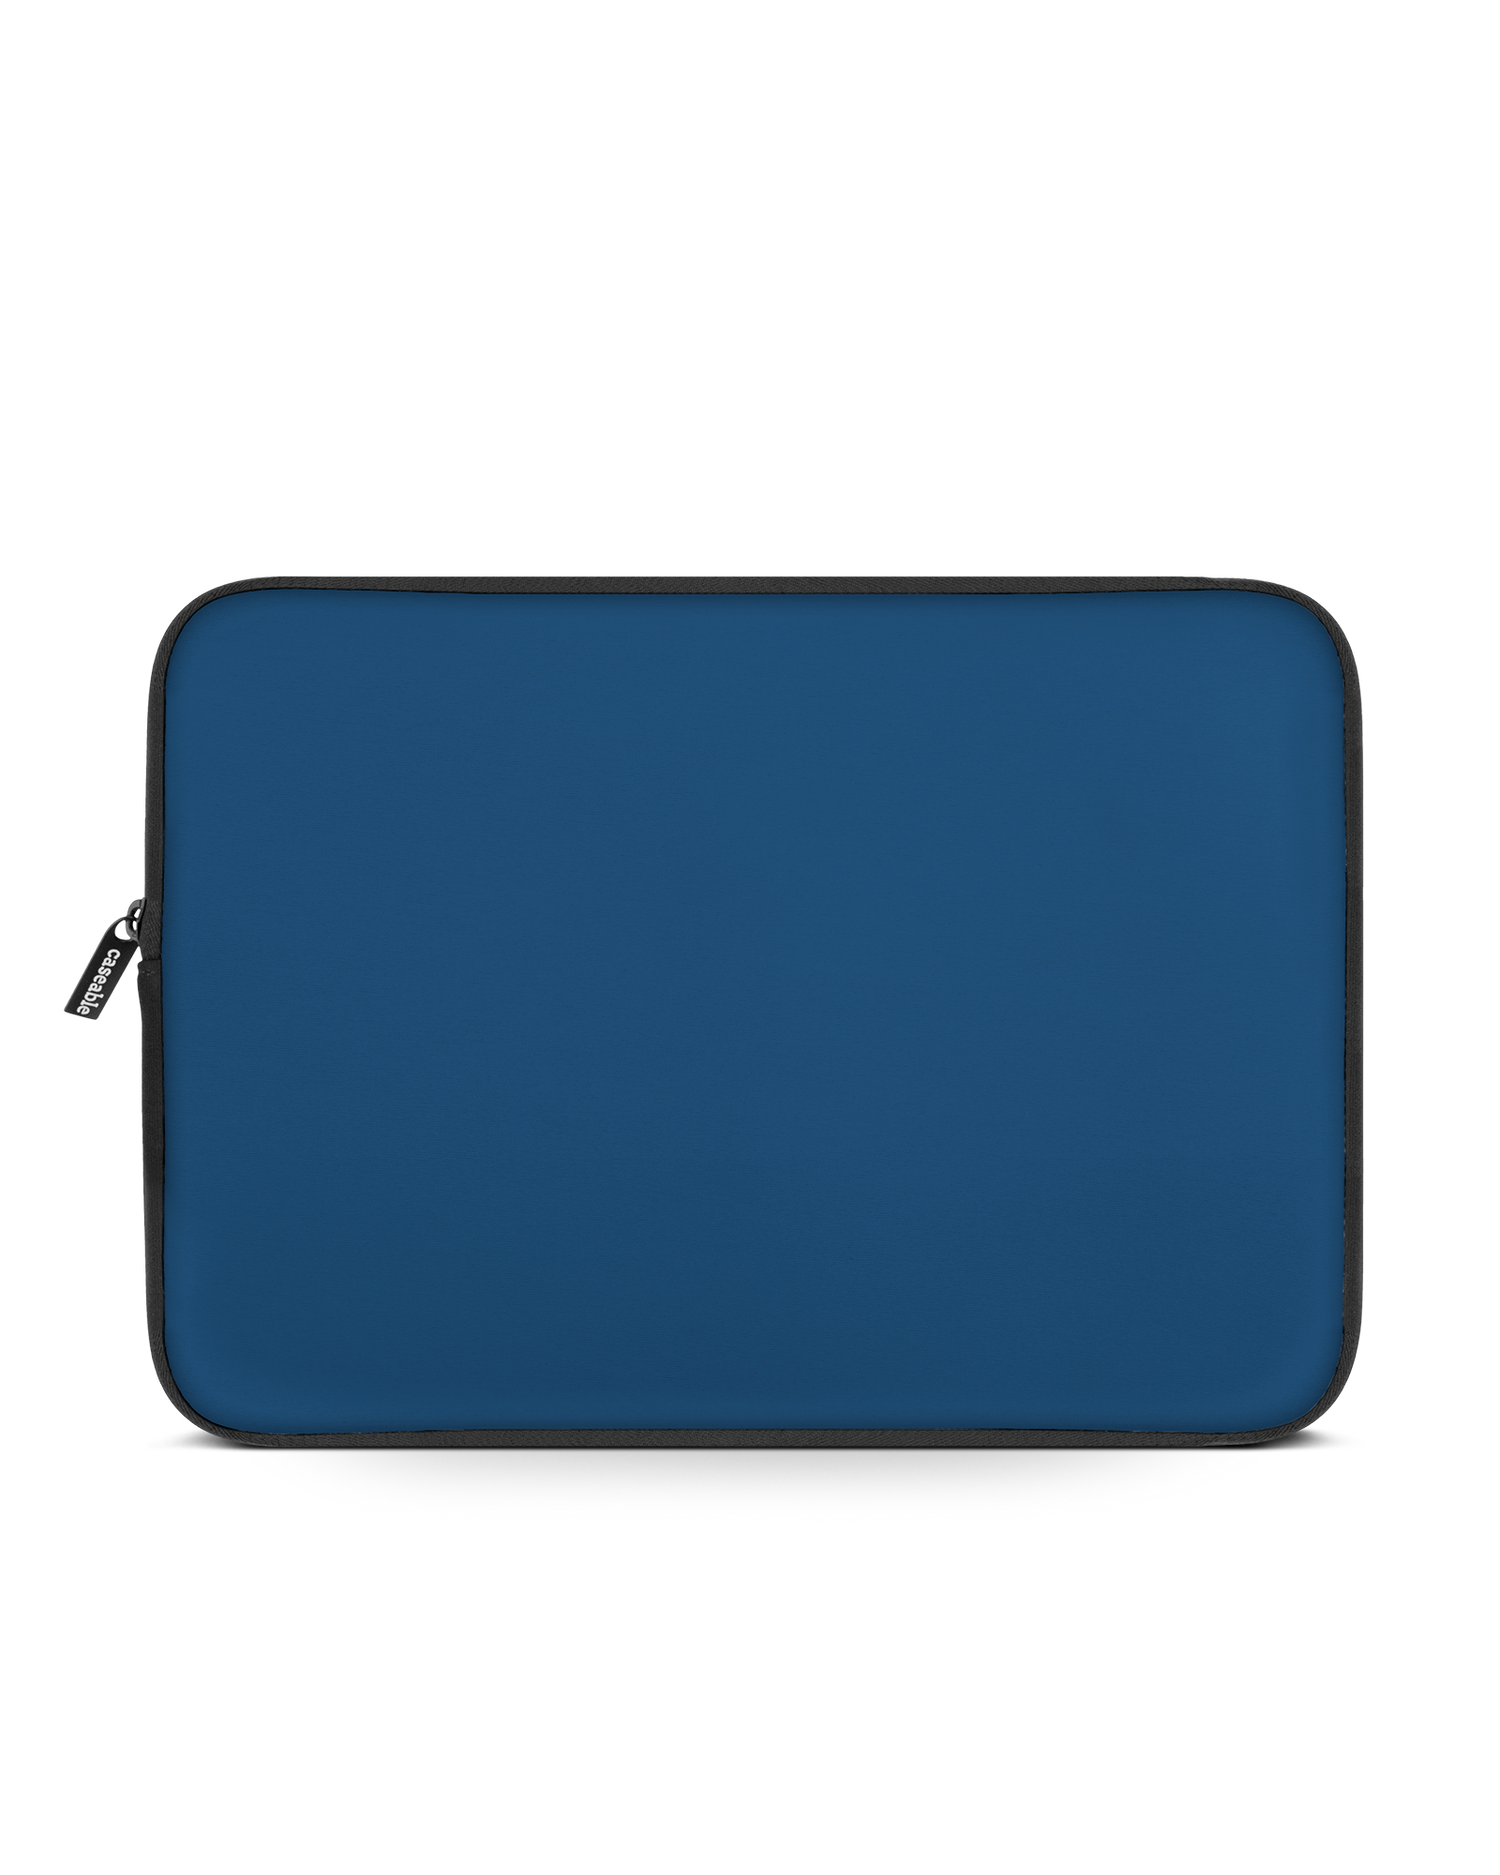 CLASSIC BLUE Laptop Case 16 inch: Front View